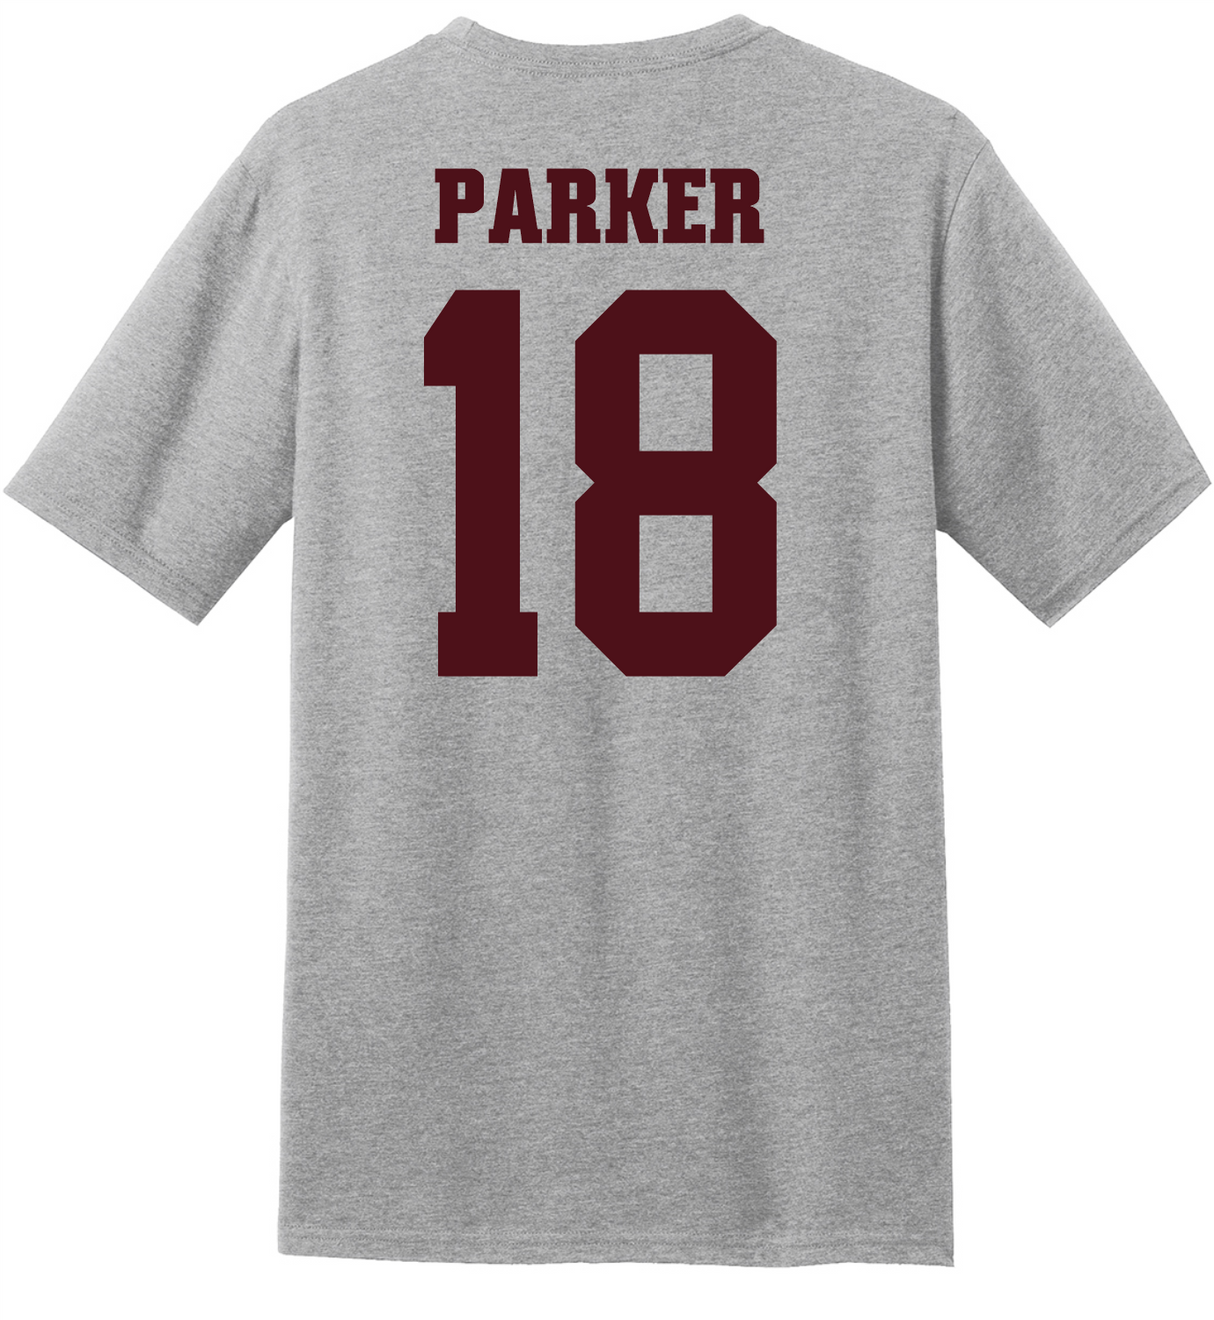 Parker #18 Football Tee